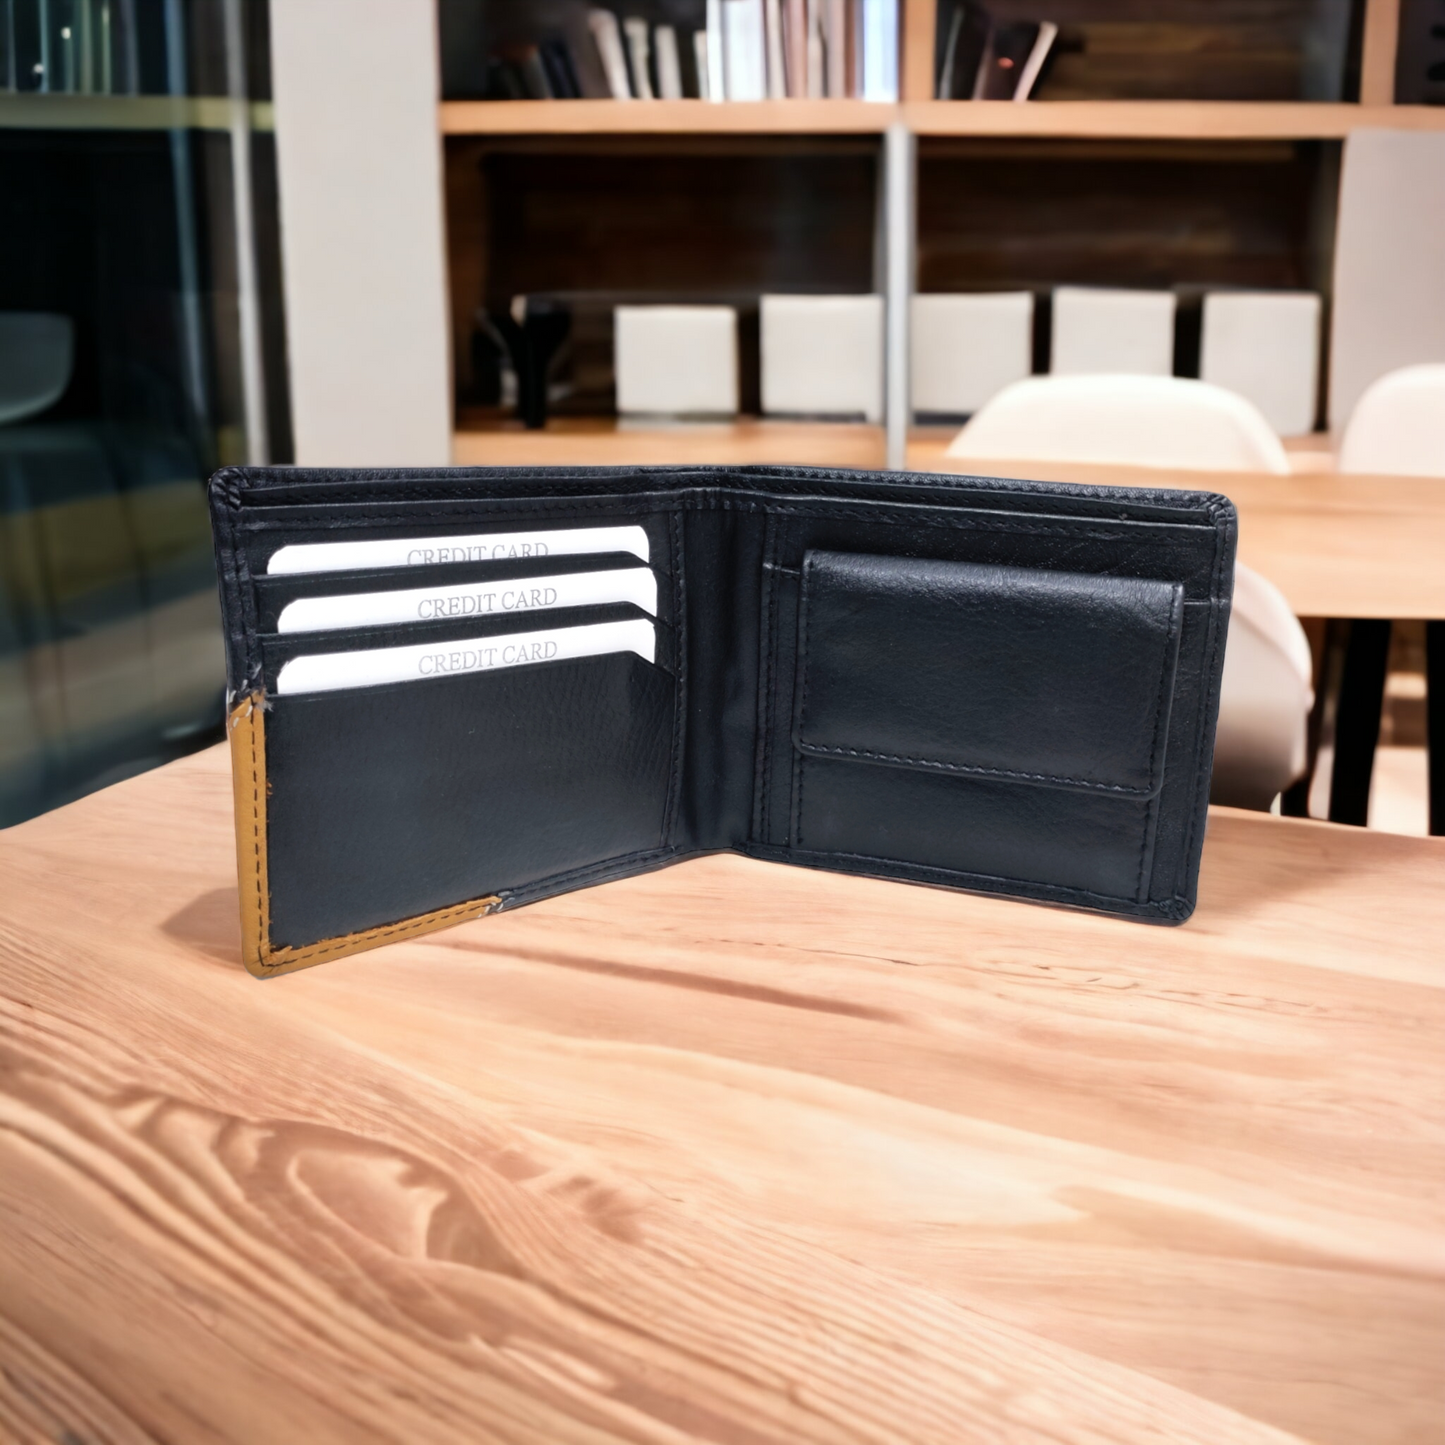 LINDSEY STREET Leather Wallet For Men Leather Money Bag Leather Notecase, Card Holder,  Gift for Him